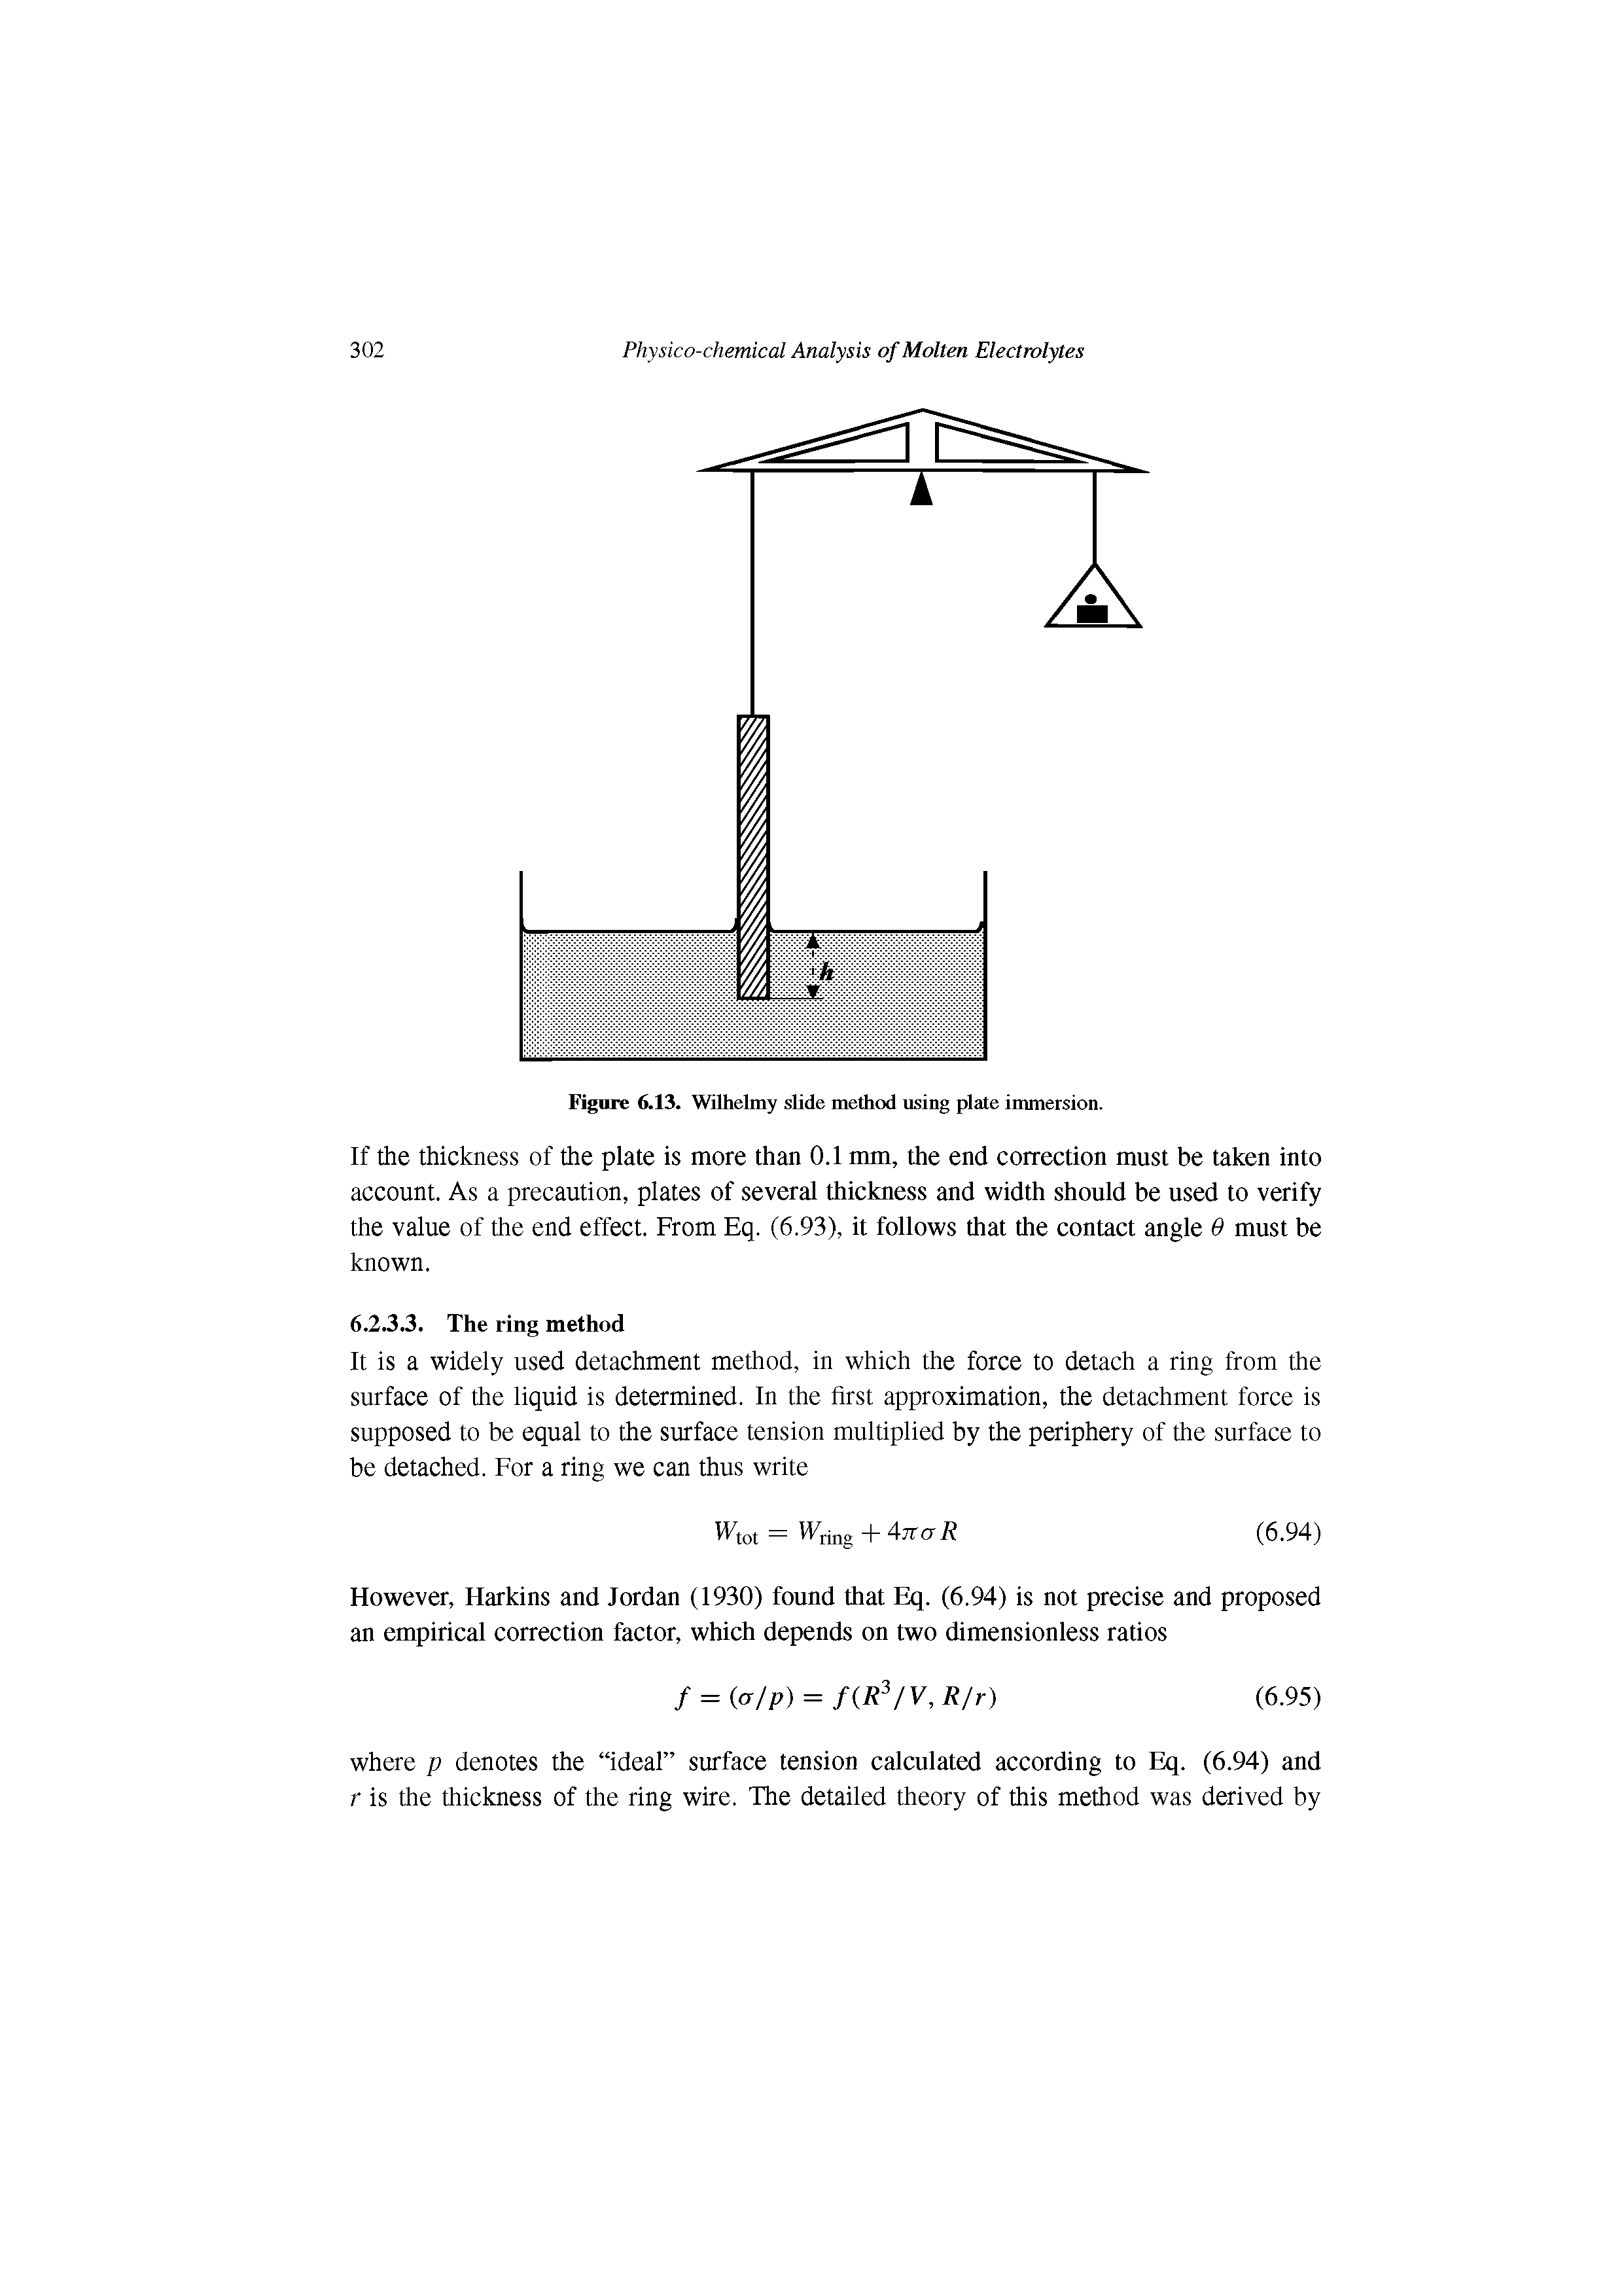 Figure 6.13. Wilhelmy slide method using plate immersion.